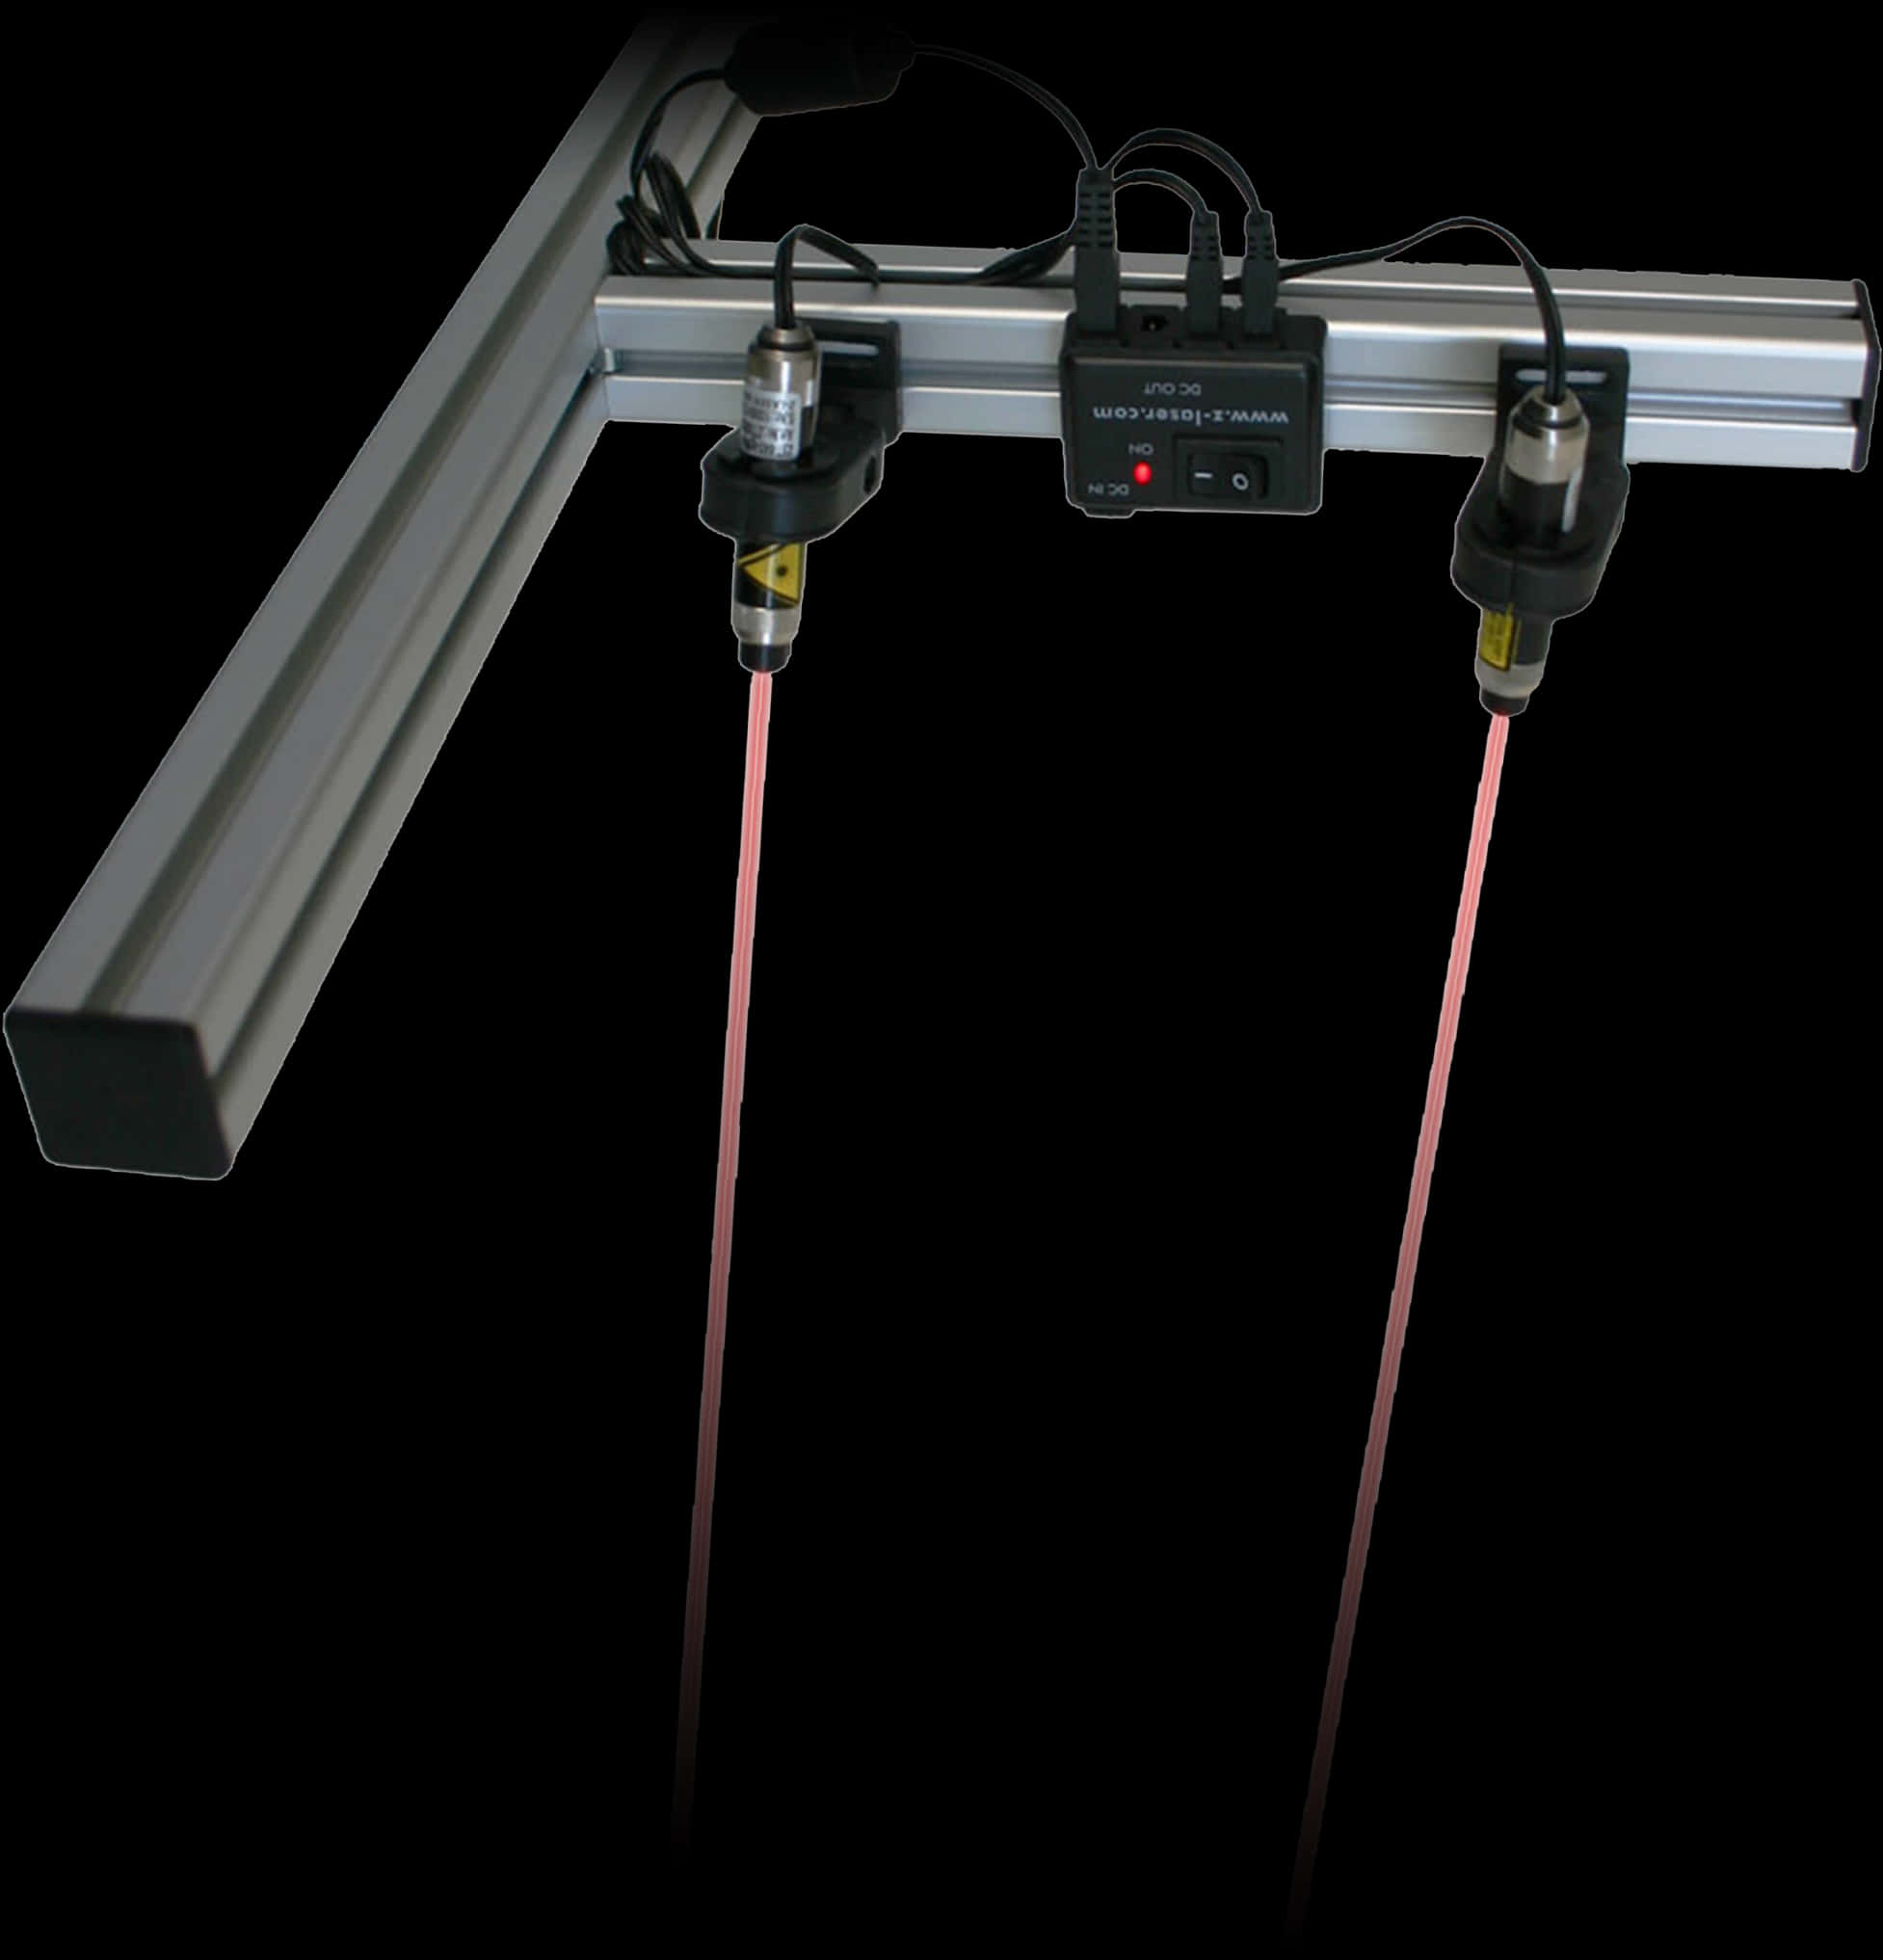 Industrial Laser Alignment Tool